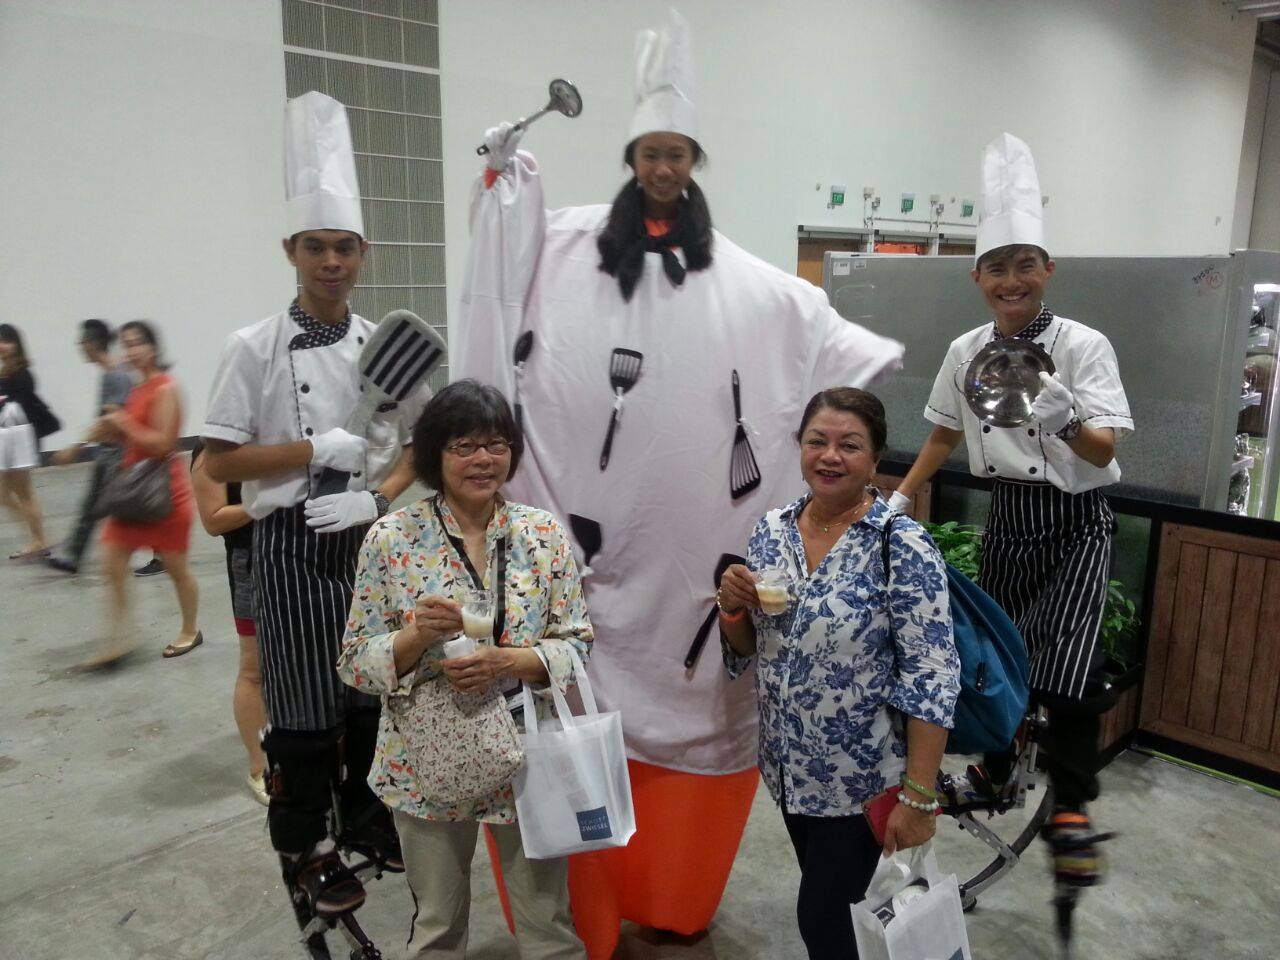 Sylvia Toh visited the Epicurean Market at Marina Bay Sands